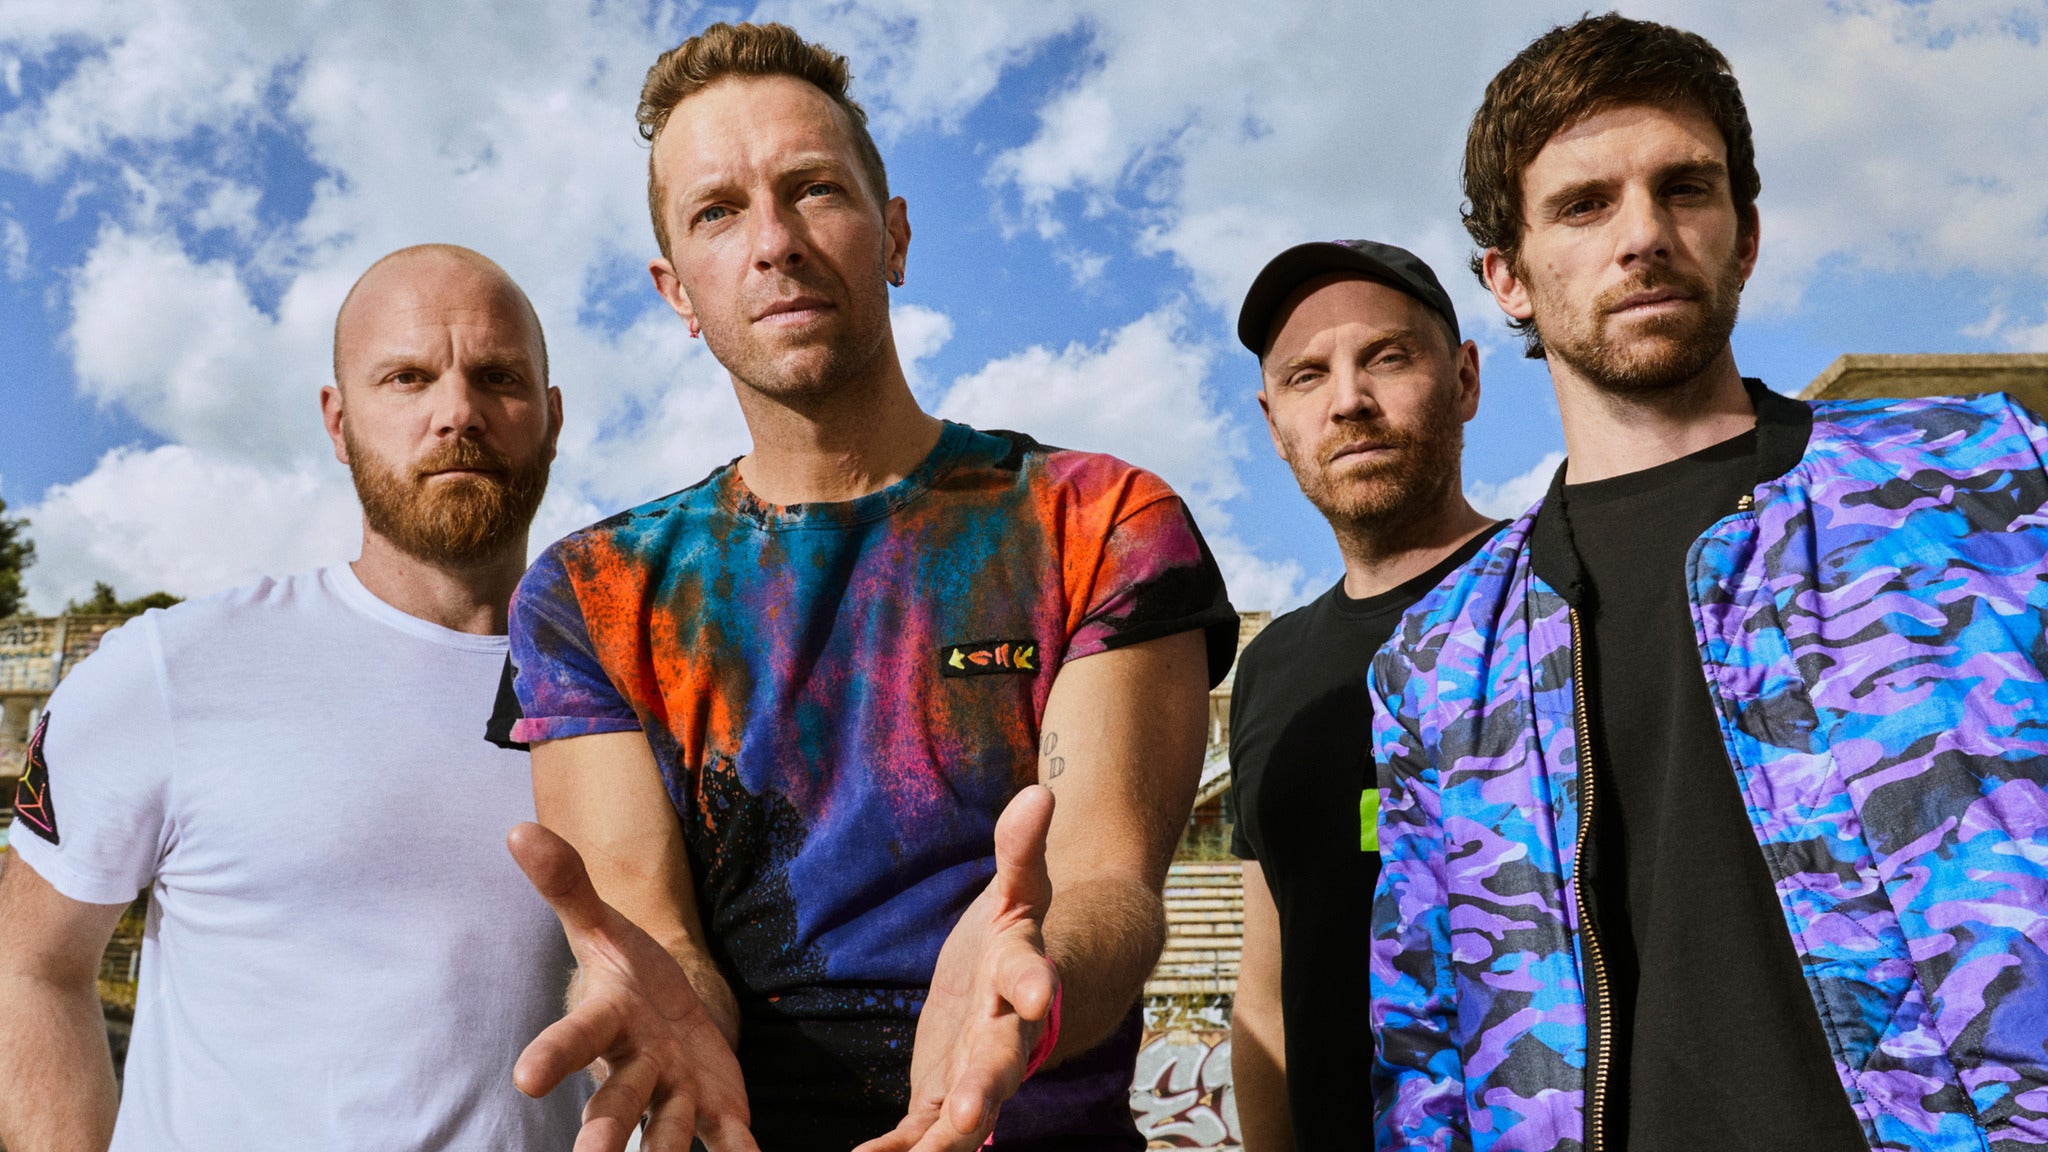 Coldplay - MUSIC OF THE SPHERES WORLD TOUR - Santa Clara, CA 95054